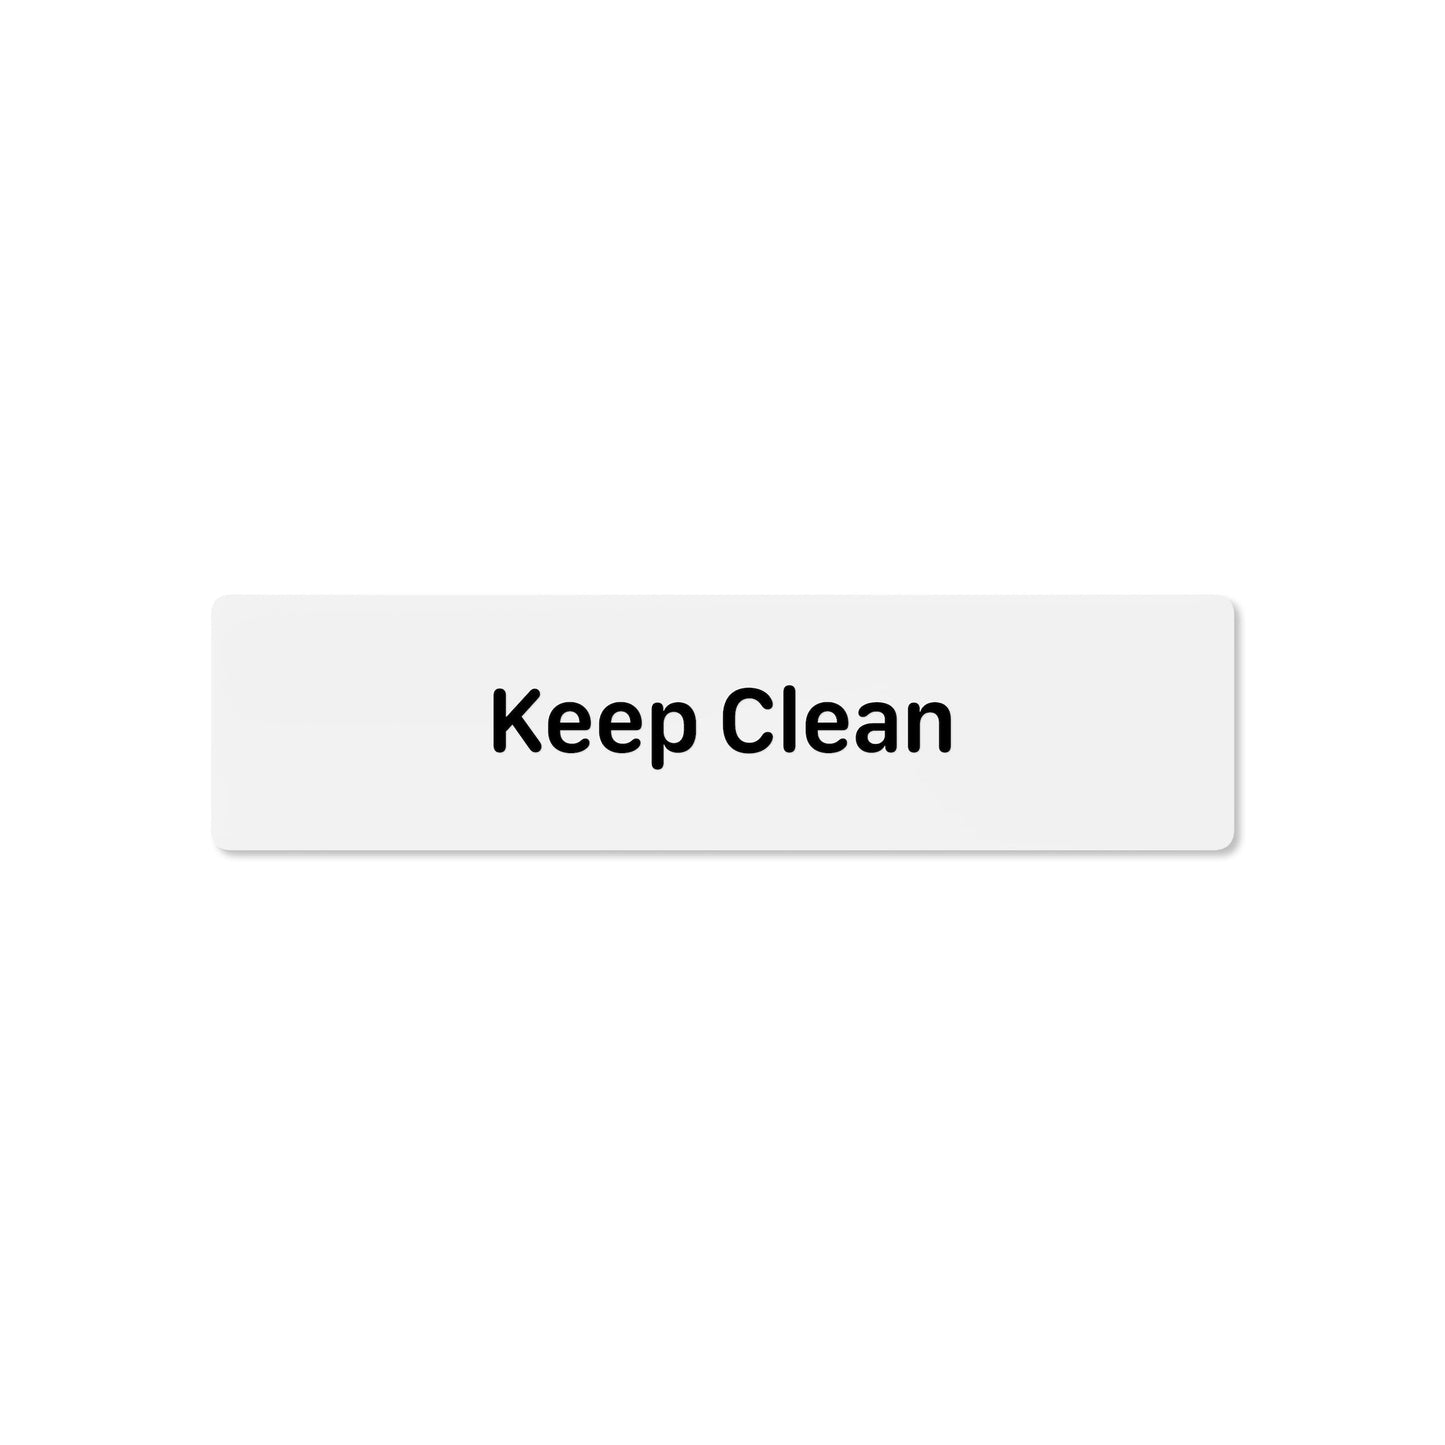 Keep Clean